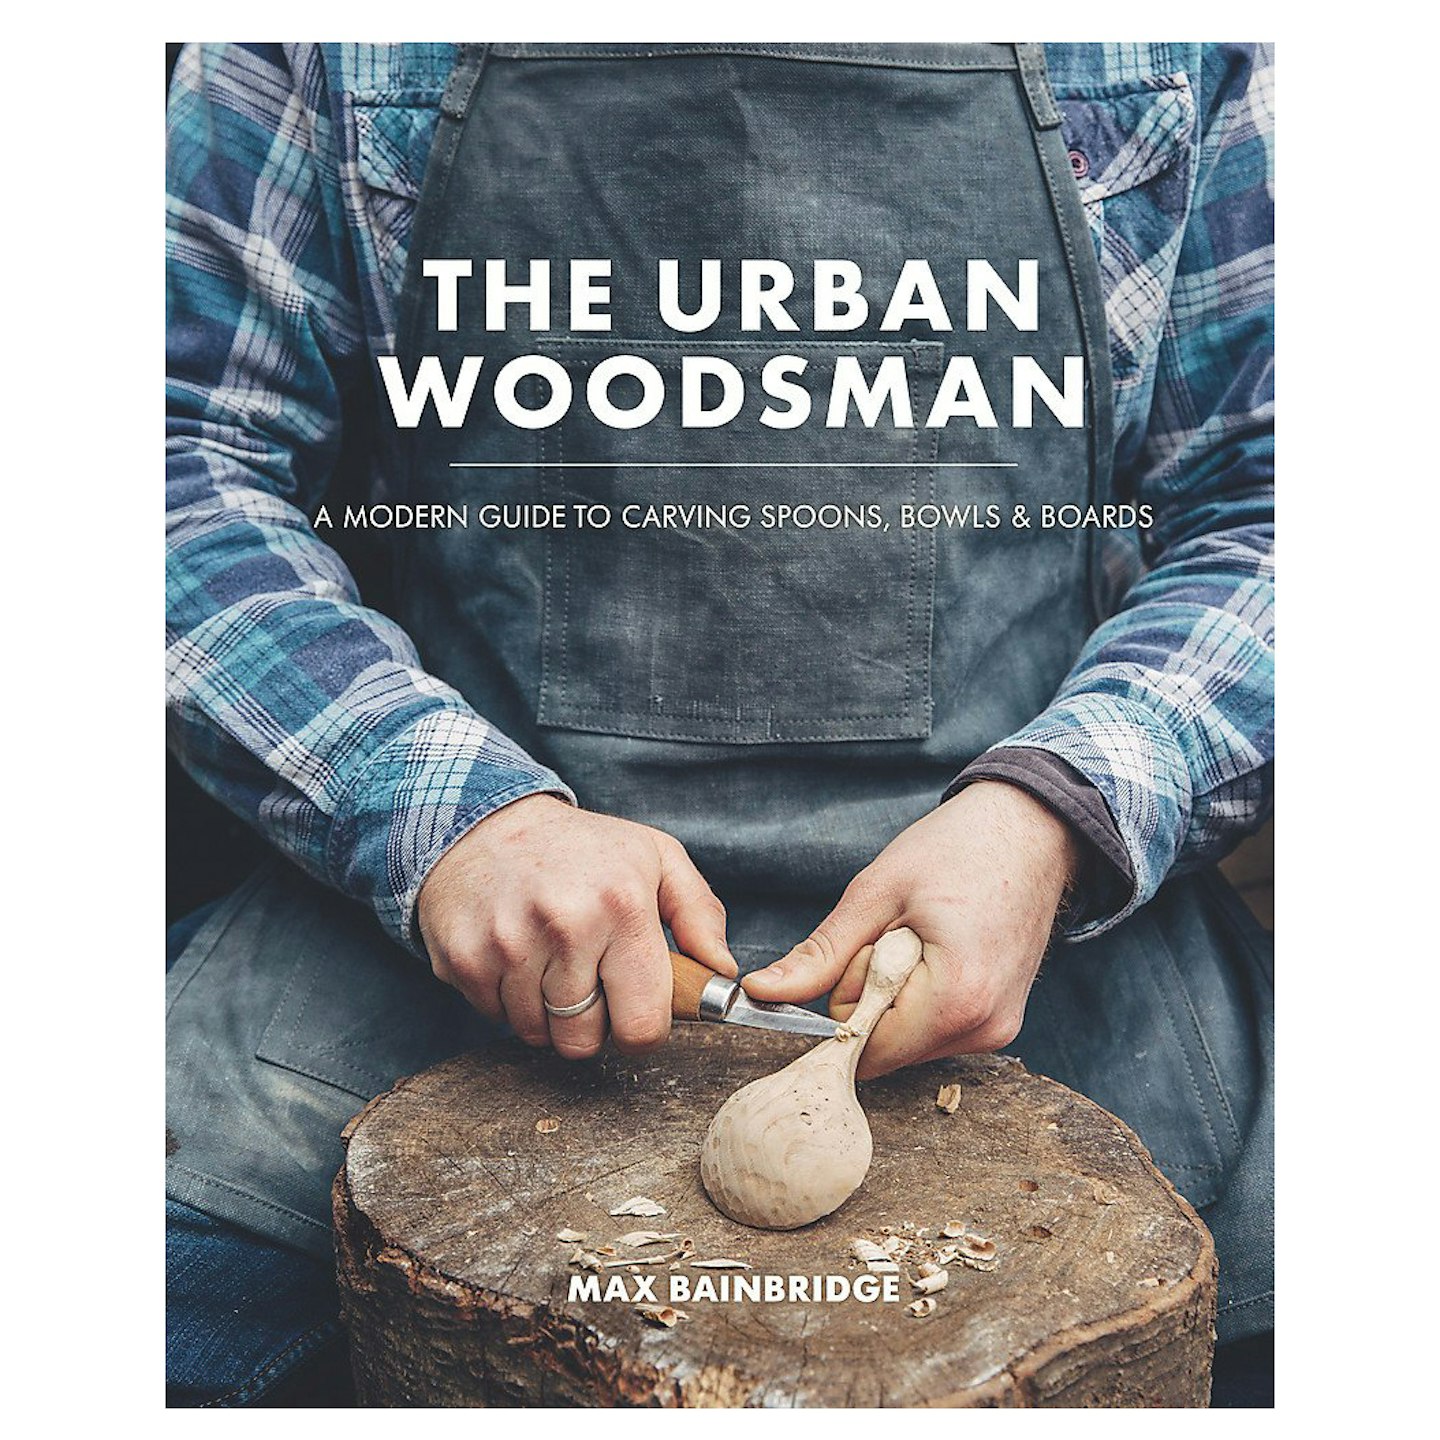 The Urban Woodsman